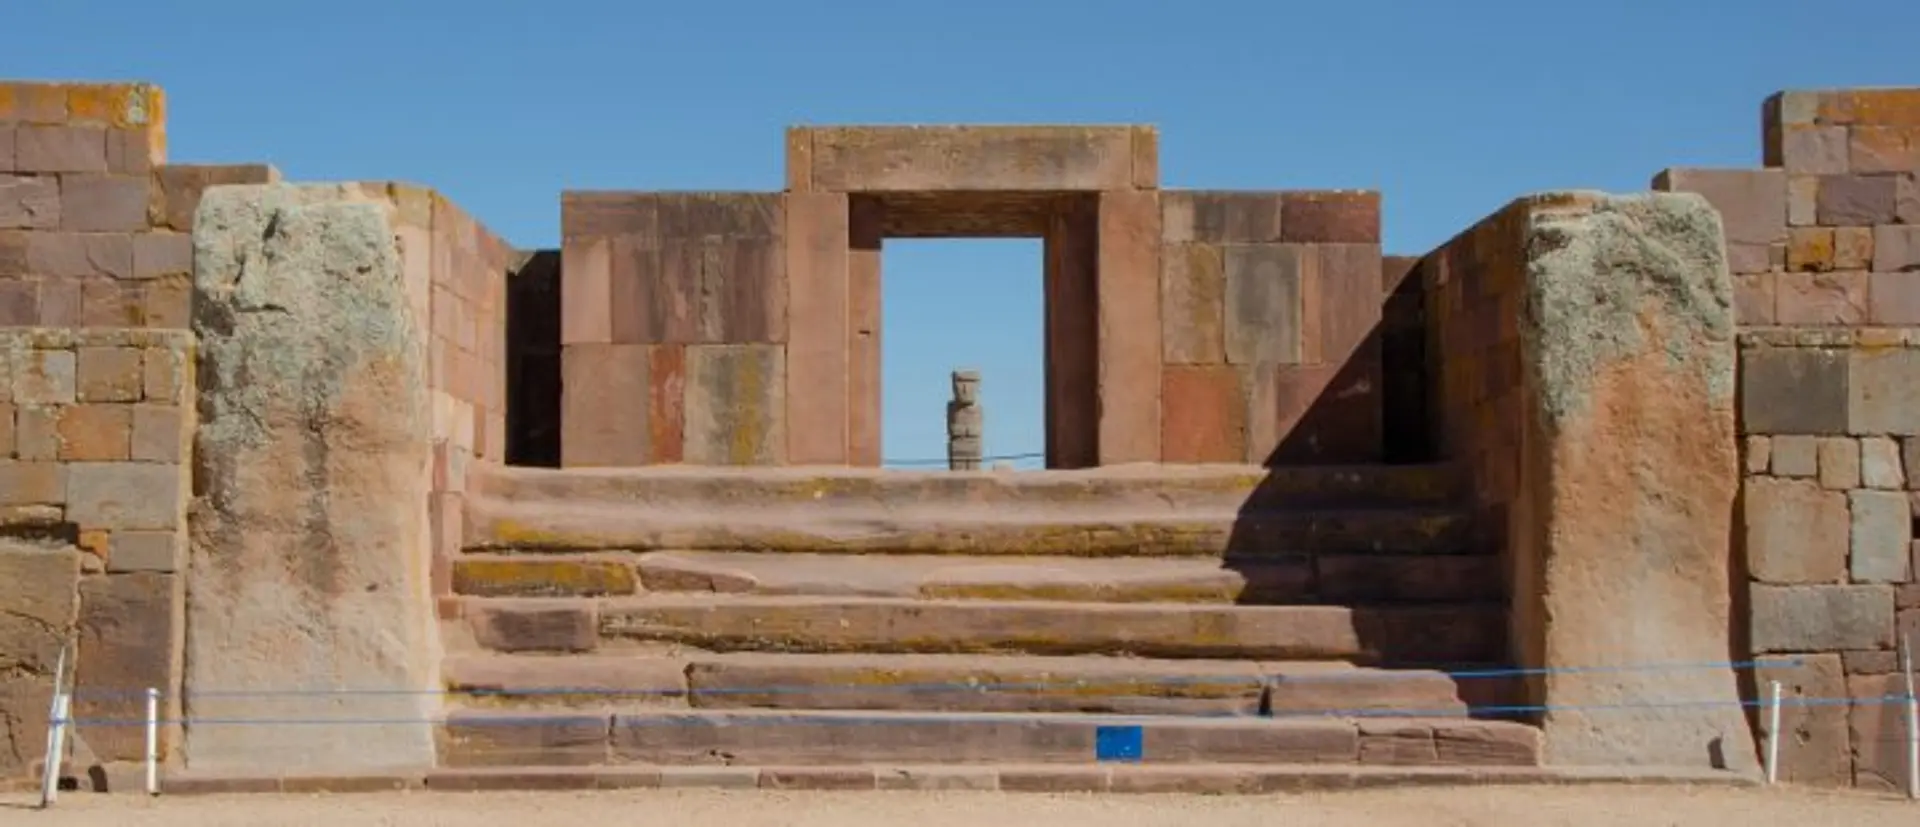 Destinations Toplists - Four Ancient Cities Worth Exploring